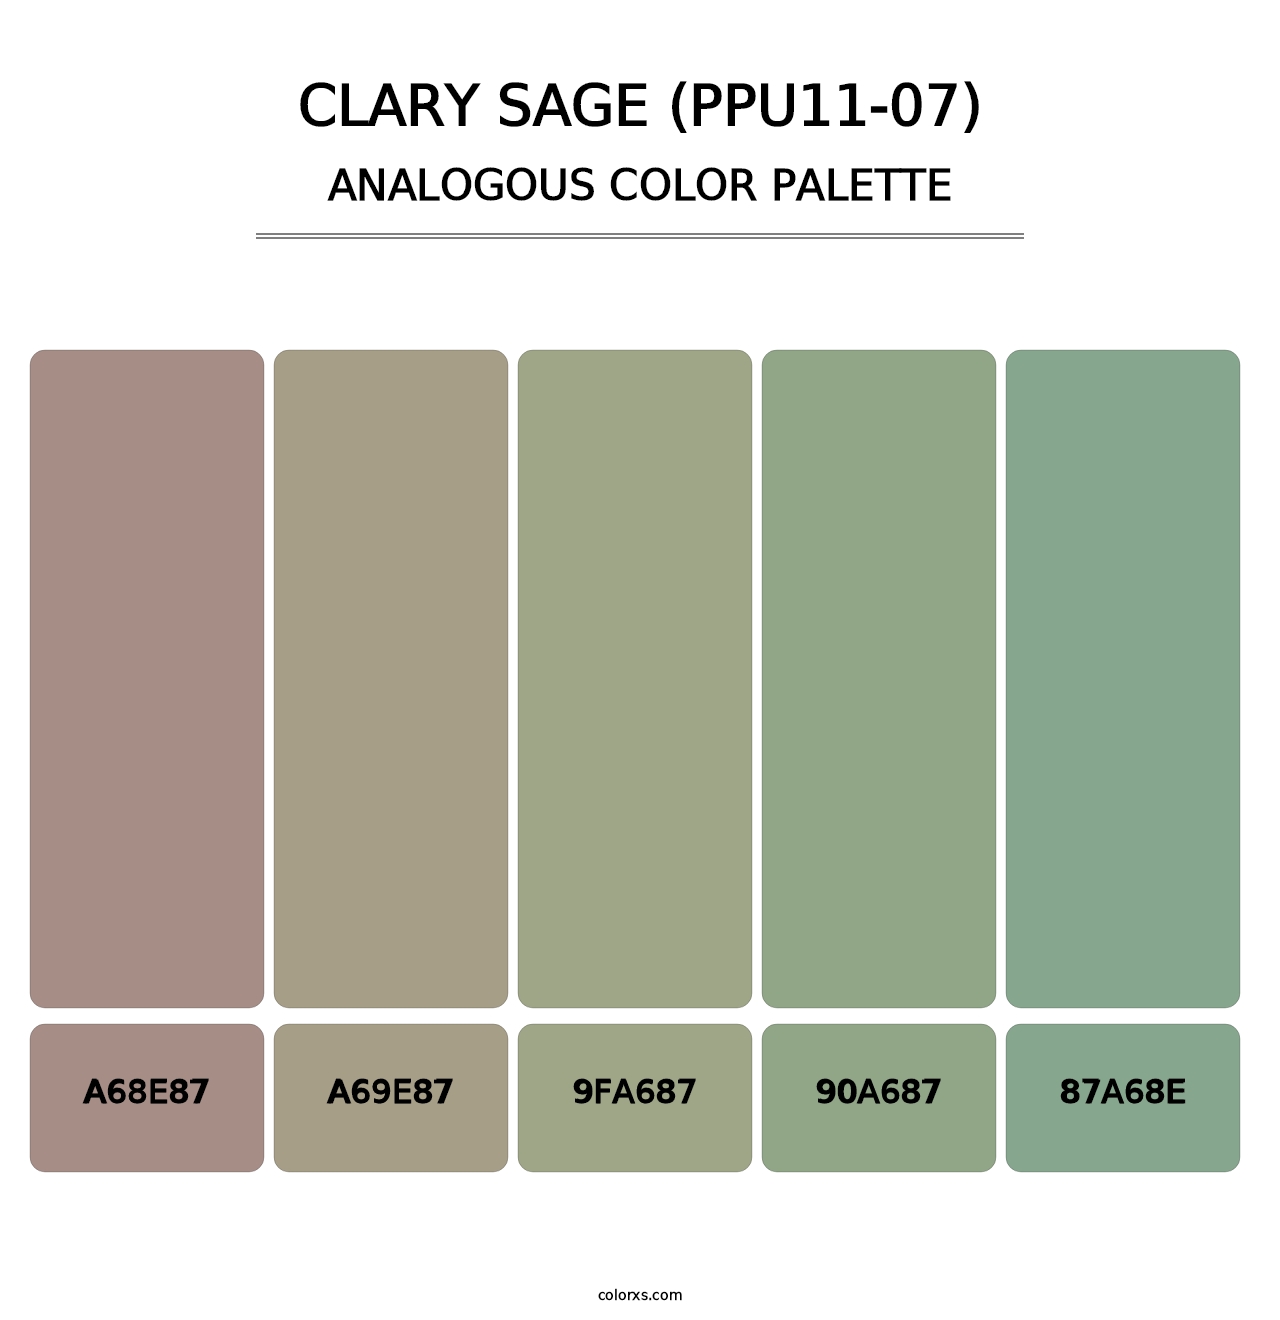 Clary Sage (PPU11-07) - Analogous Color Palette